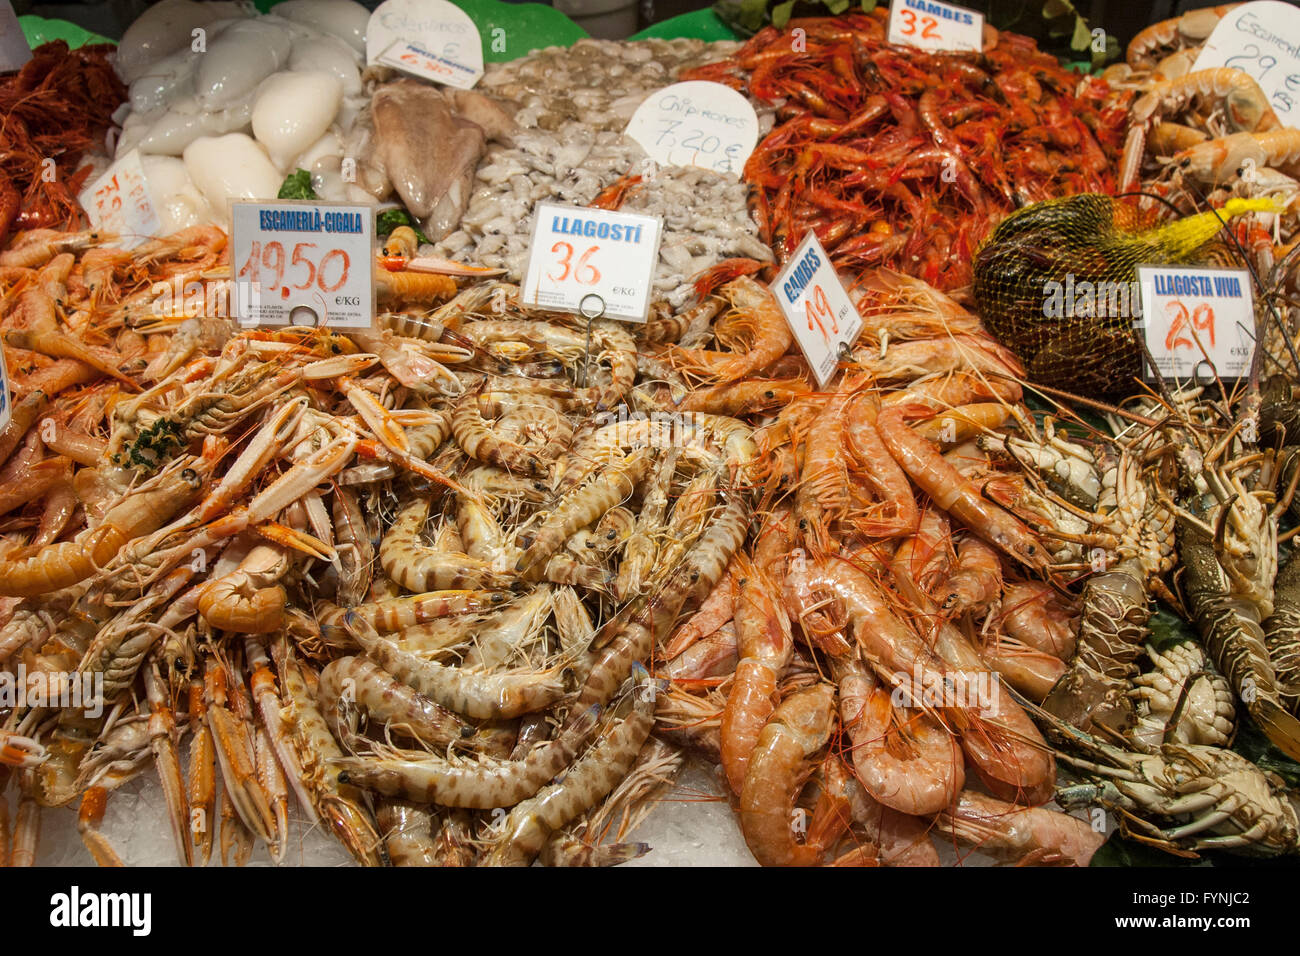 Seafood, Fish, Mercat de Sant Josep located on La Rambla, Boqueria market, Barcelona, Spain Stock Photo